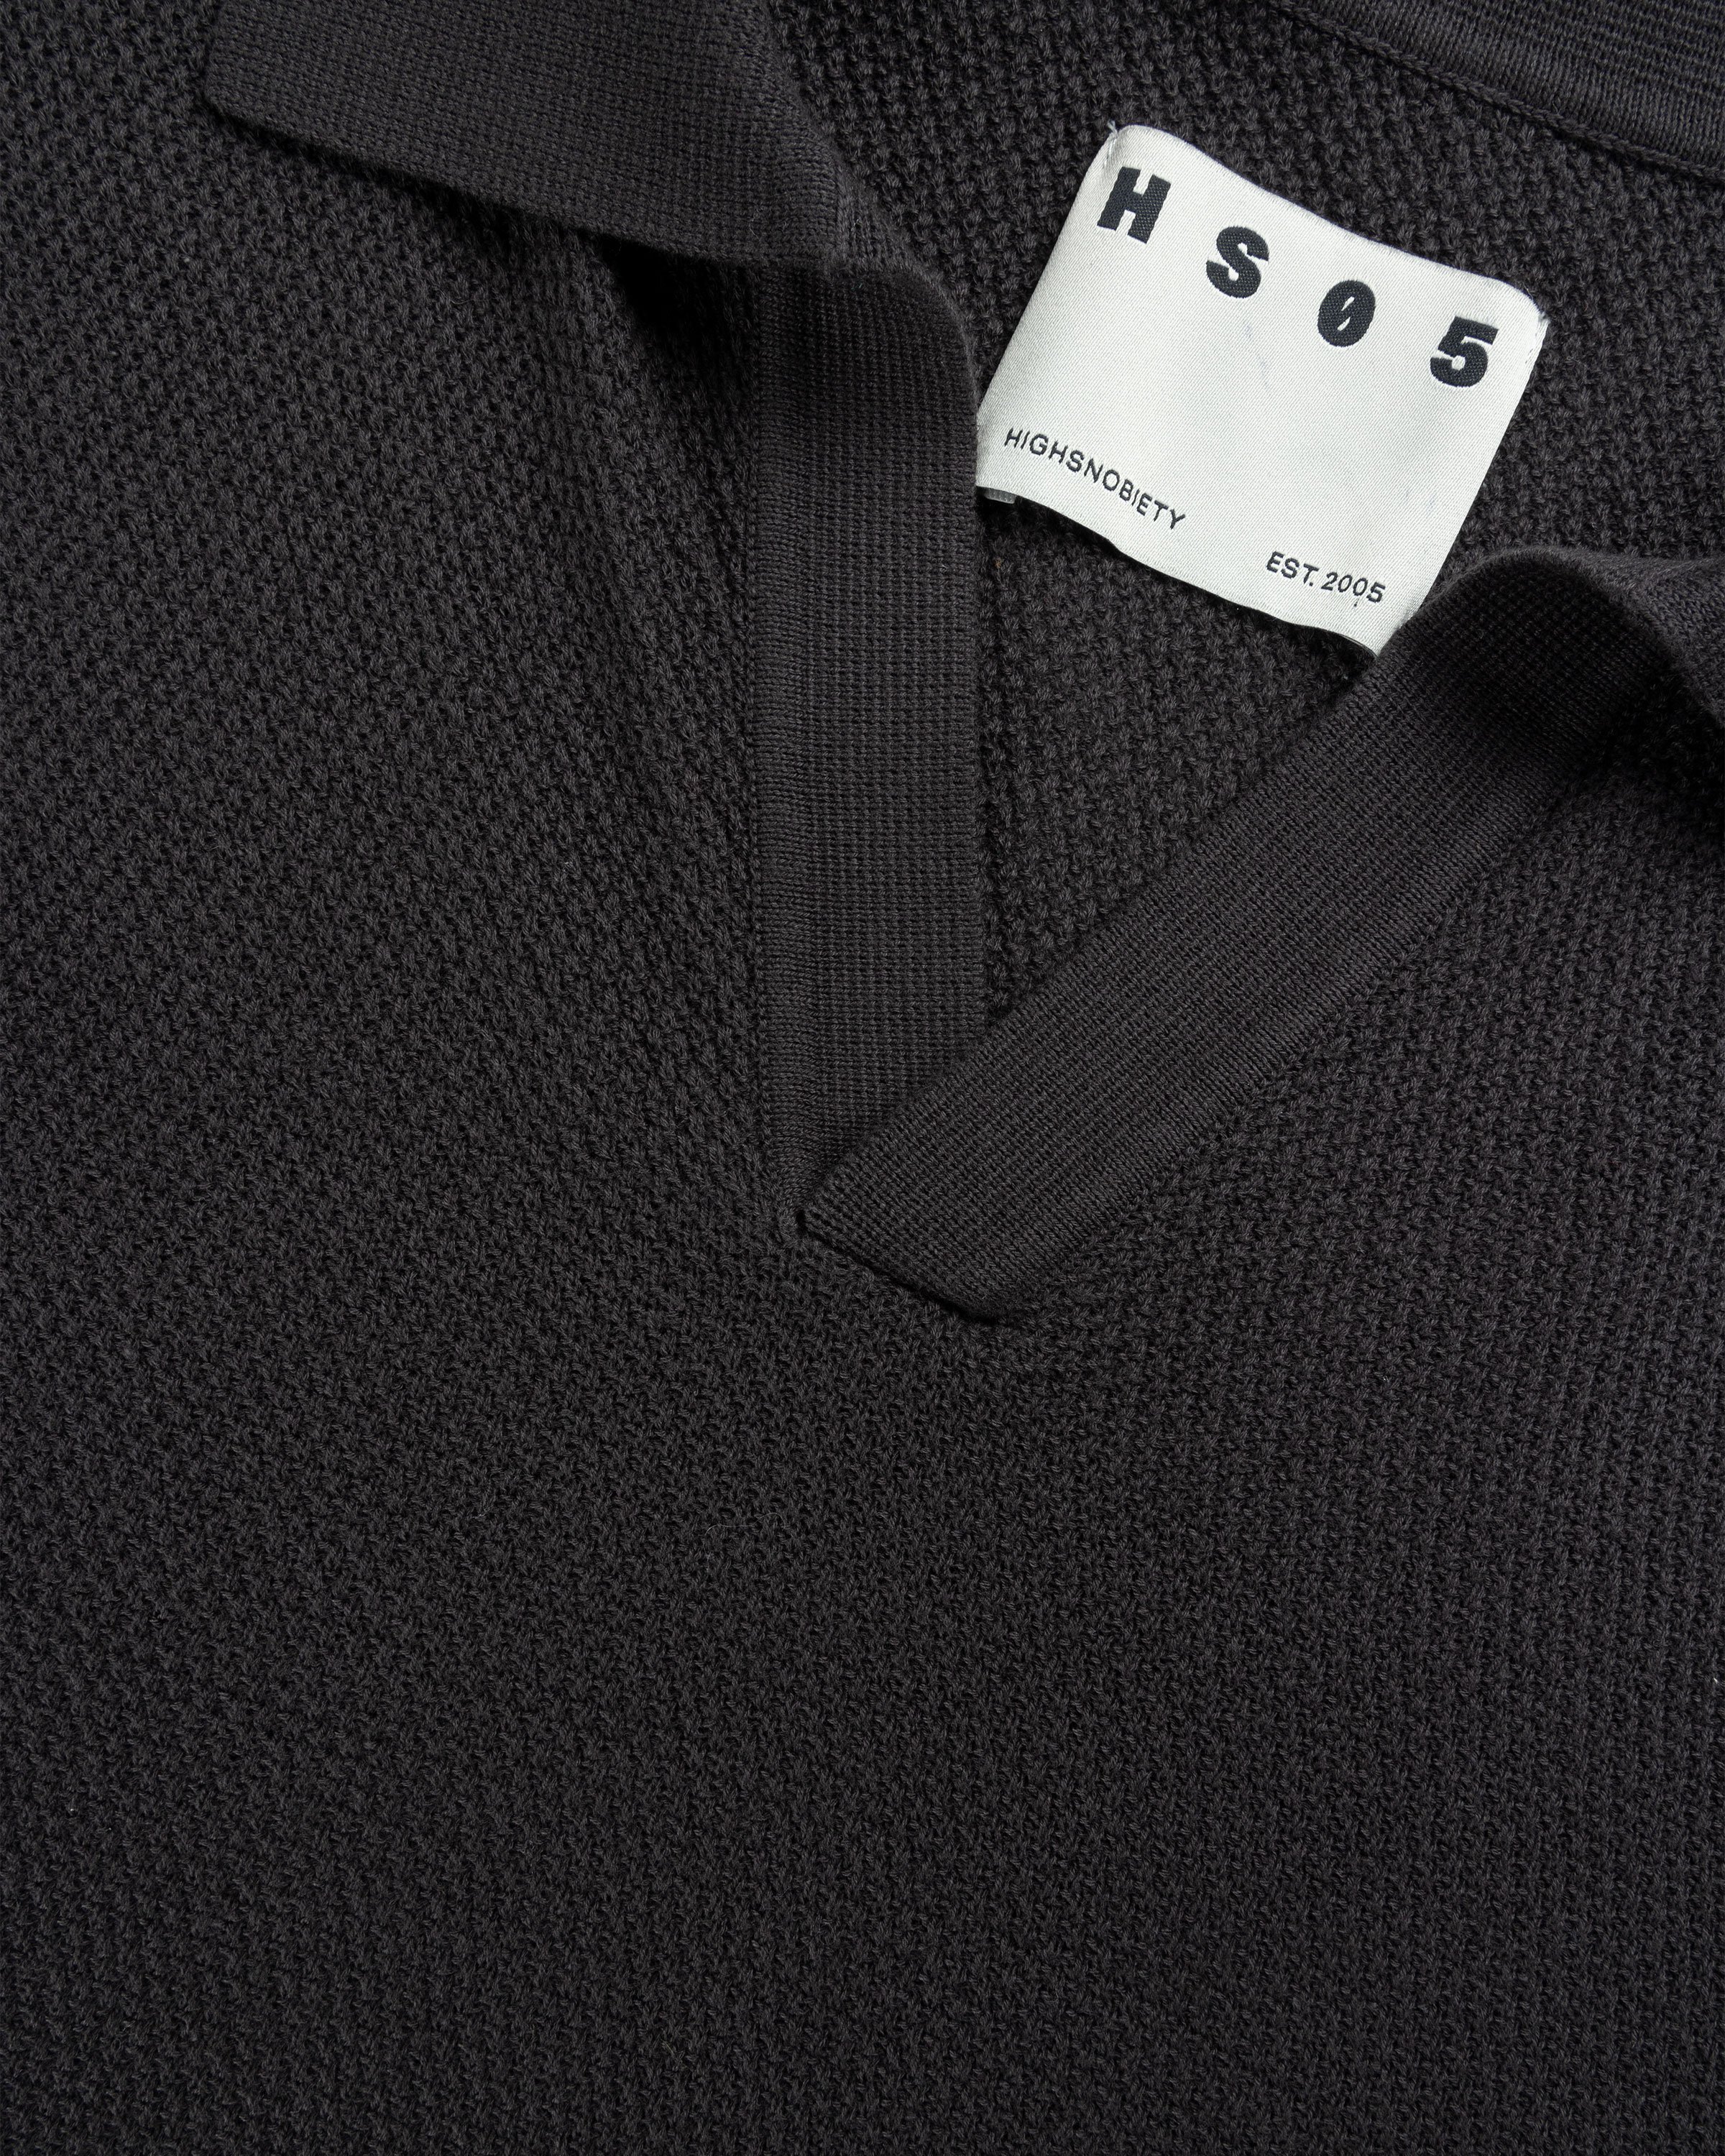 Highsnobiety HS05 - Light Knit Polo Black - Clothing - Black - Image 7